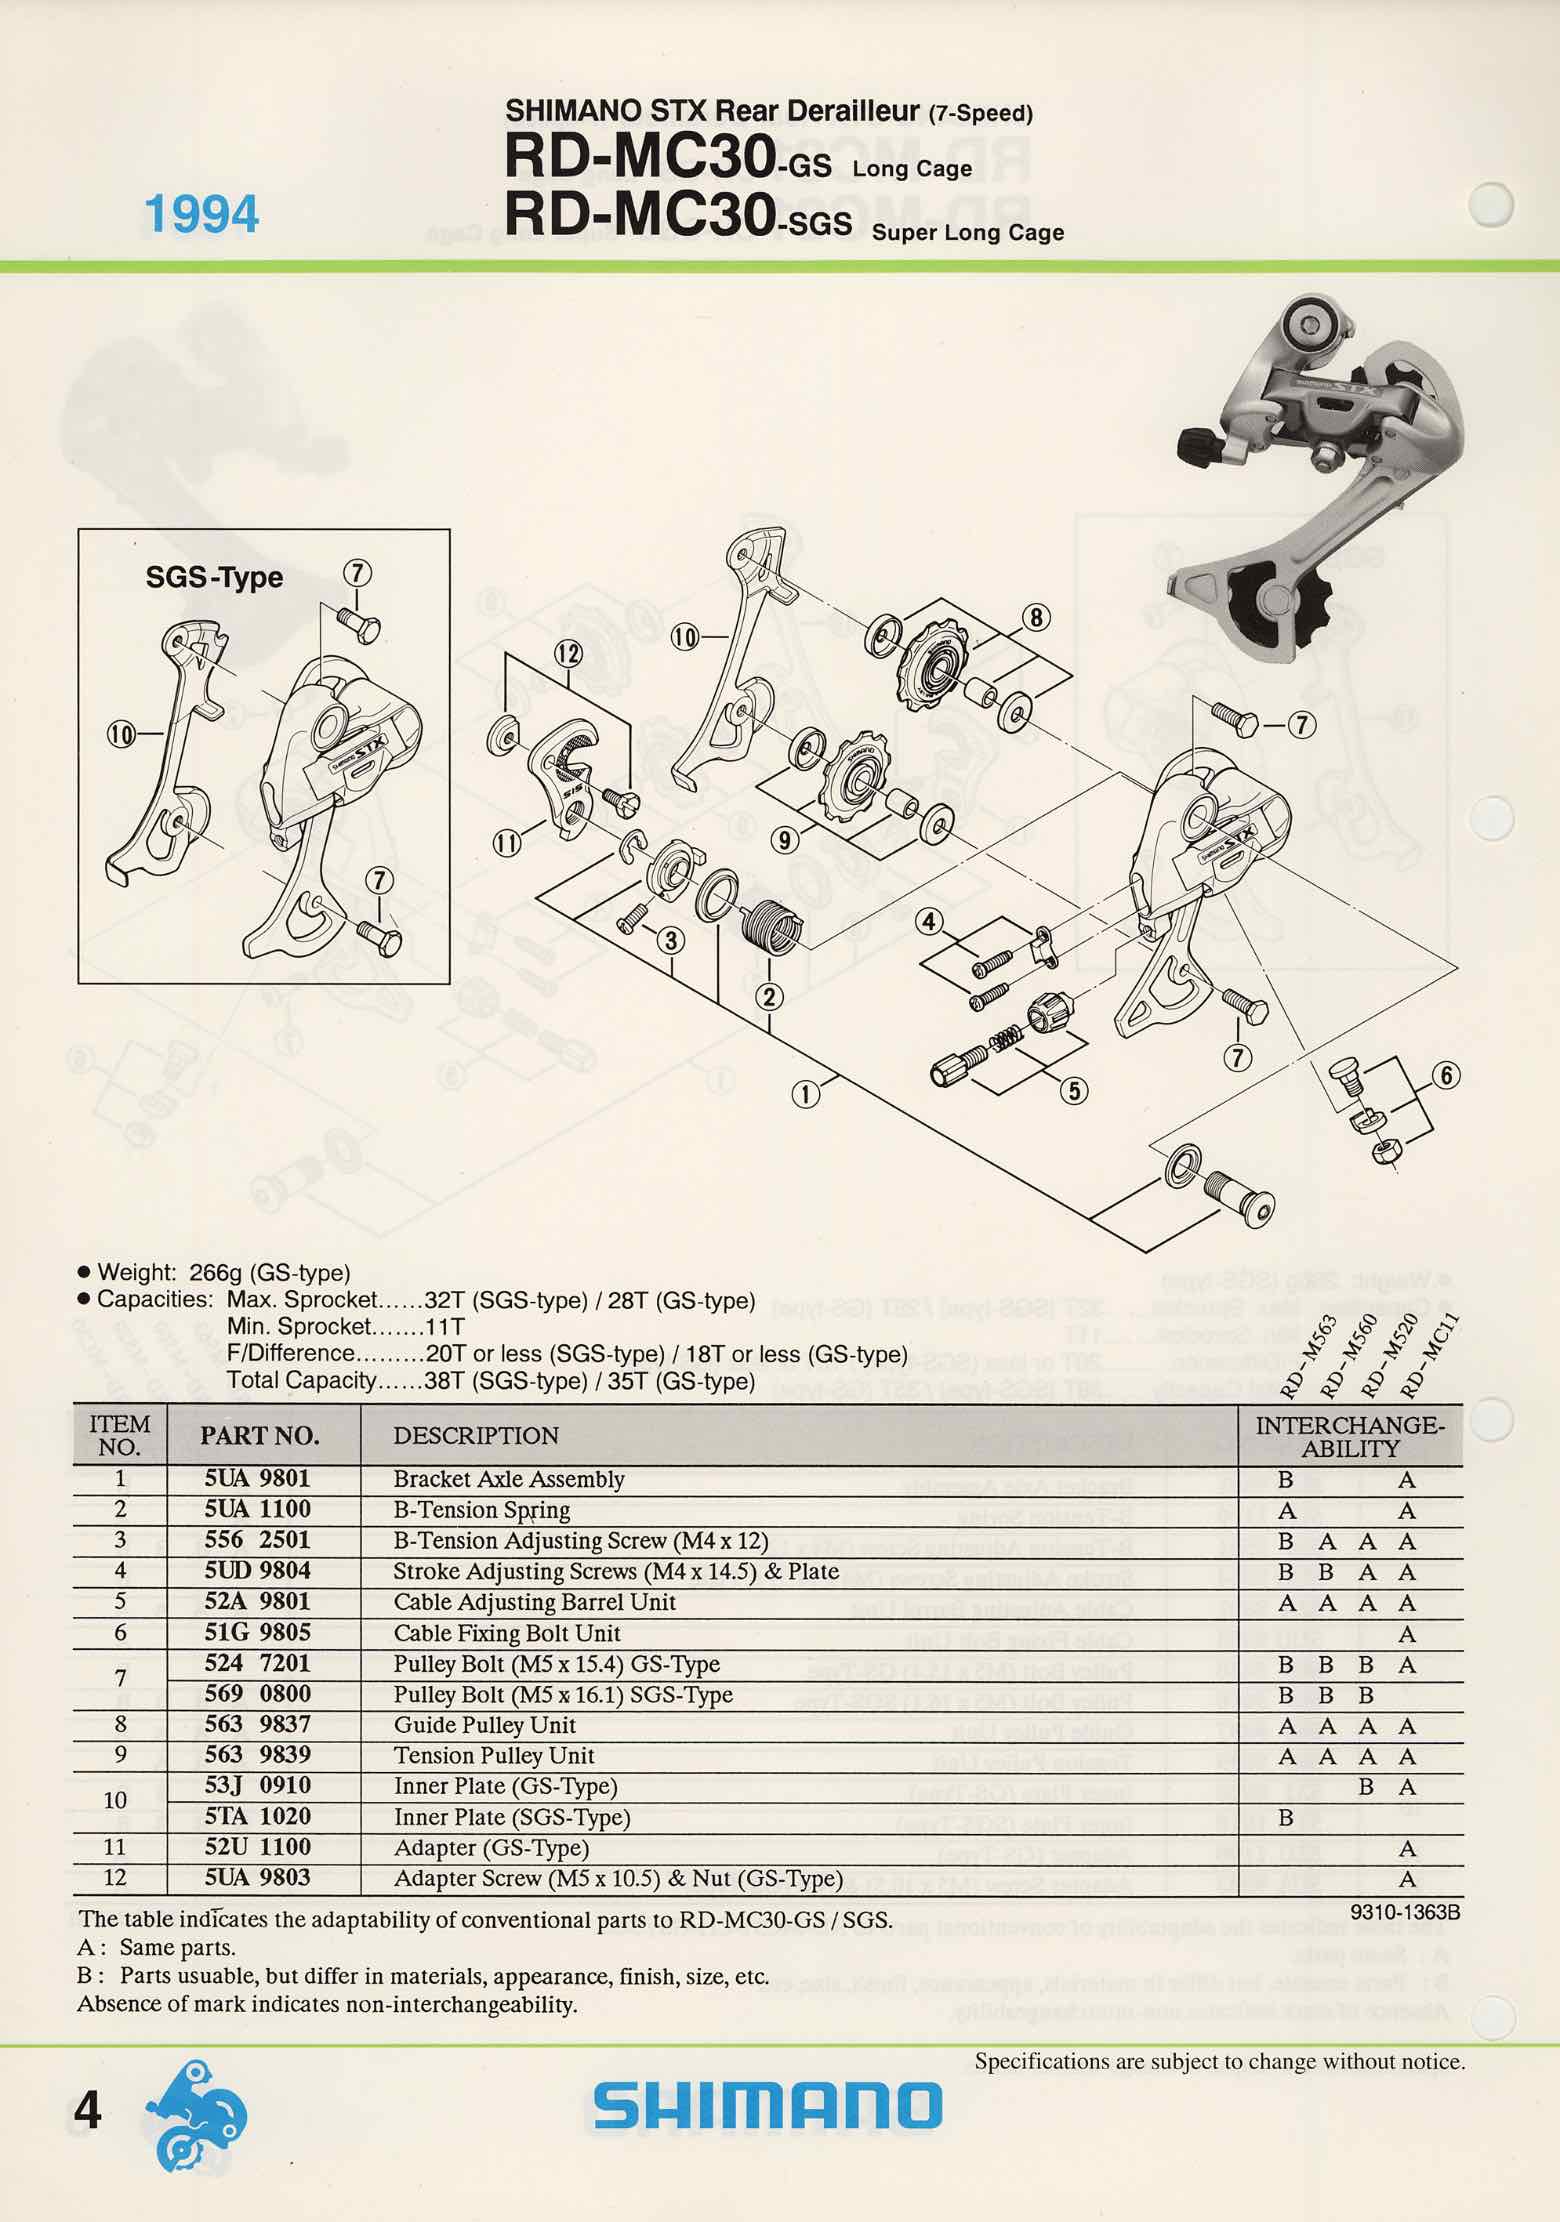 Shimano Spare Parts Catalogue - 1994 to 2004 s5 p4 main image